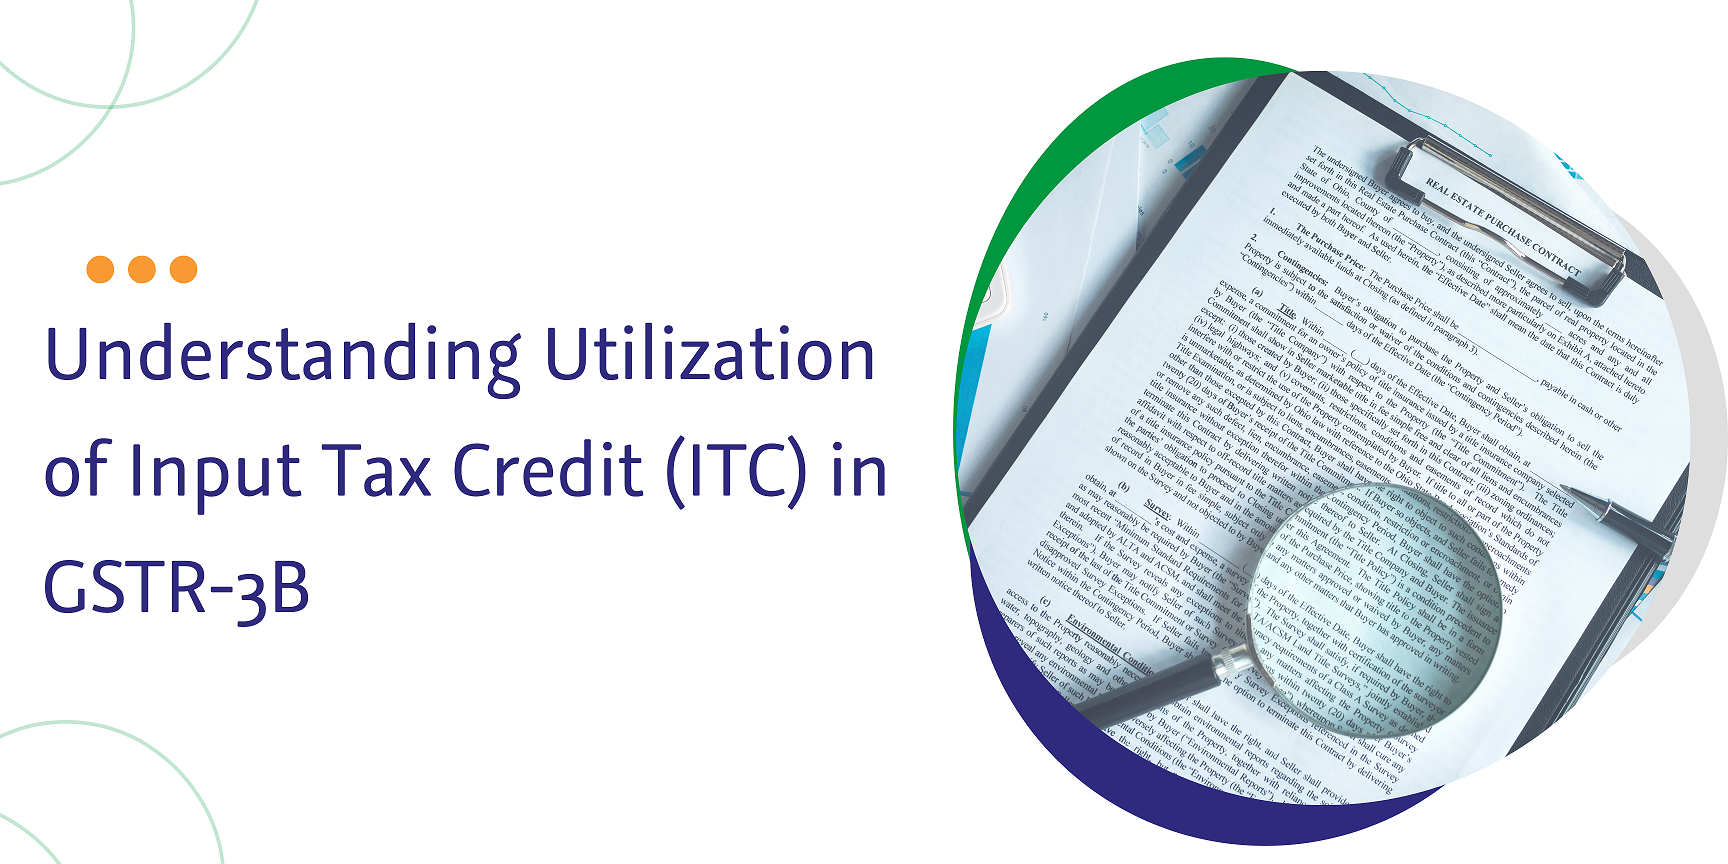 understanding utilization of input tax credit in gstr-3b